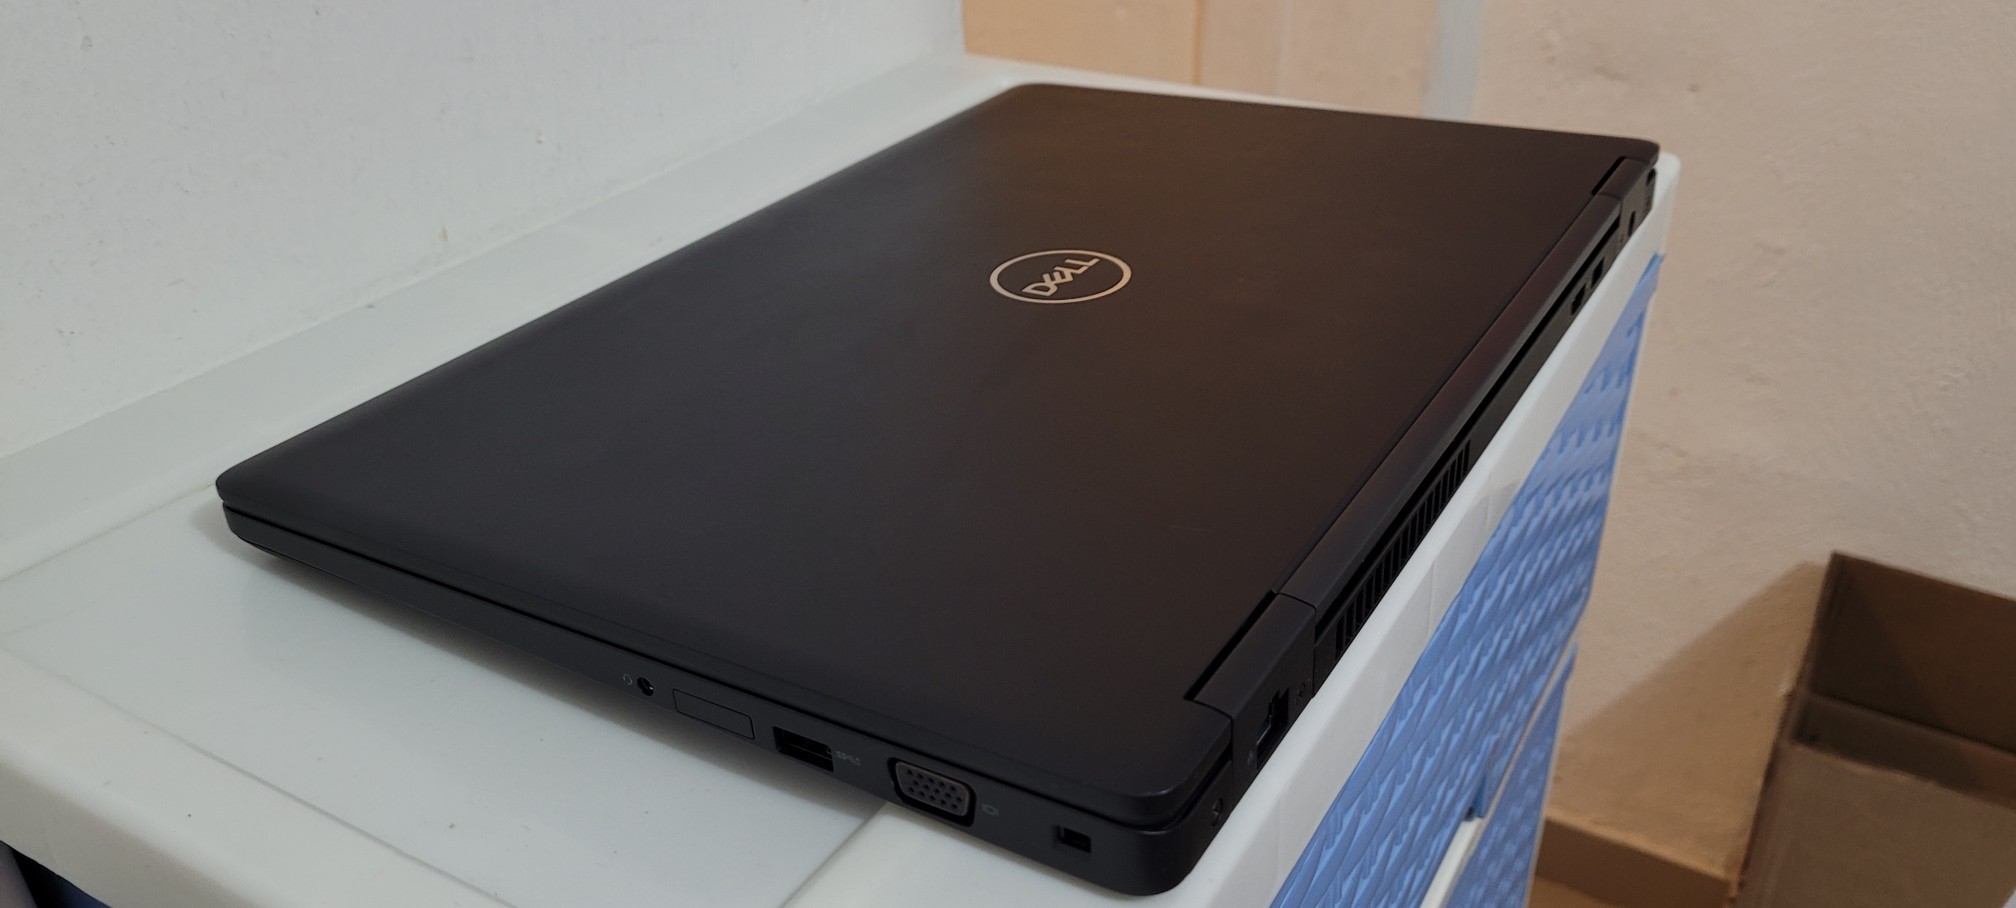 computadoras y laptops - Dell 5550 17 Pulg Core i7 Ram 12gb Disco 128gb SSD Solido Wifi 2